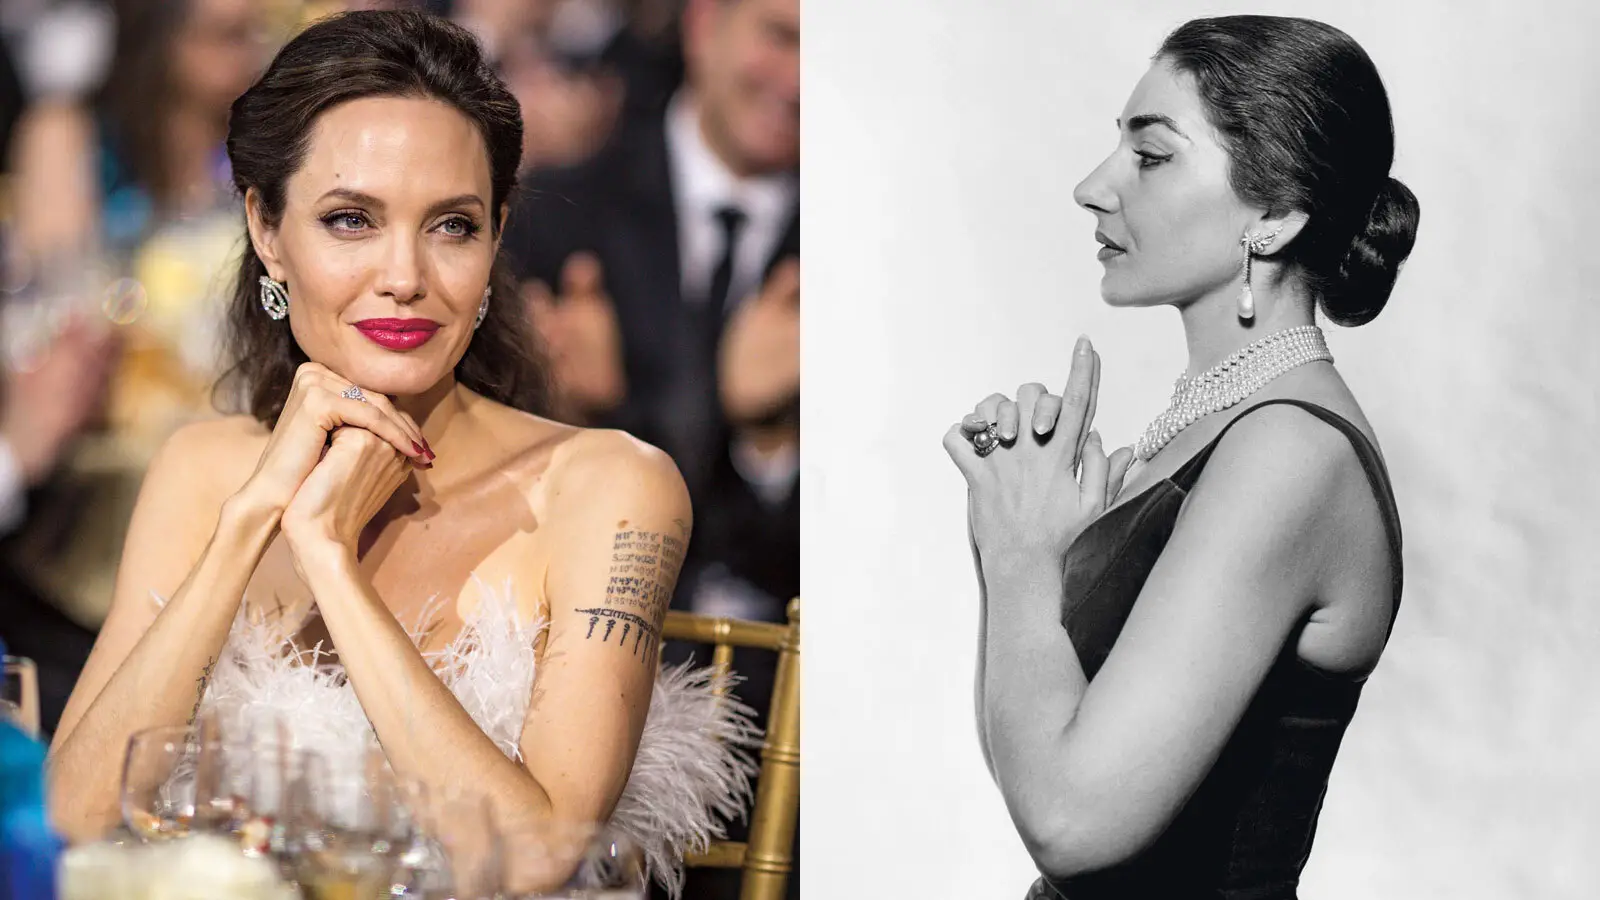 The Upcoming Biopic Maria Callas Starring Angelina Jolie